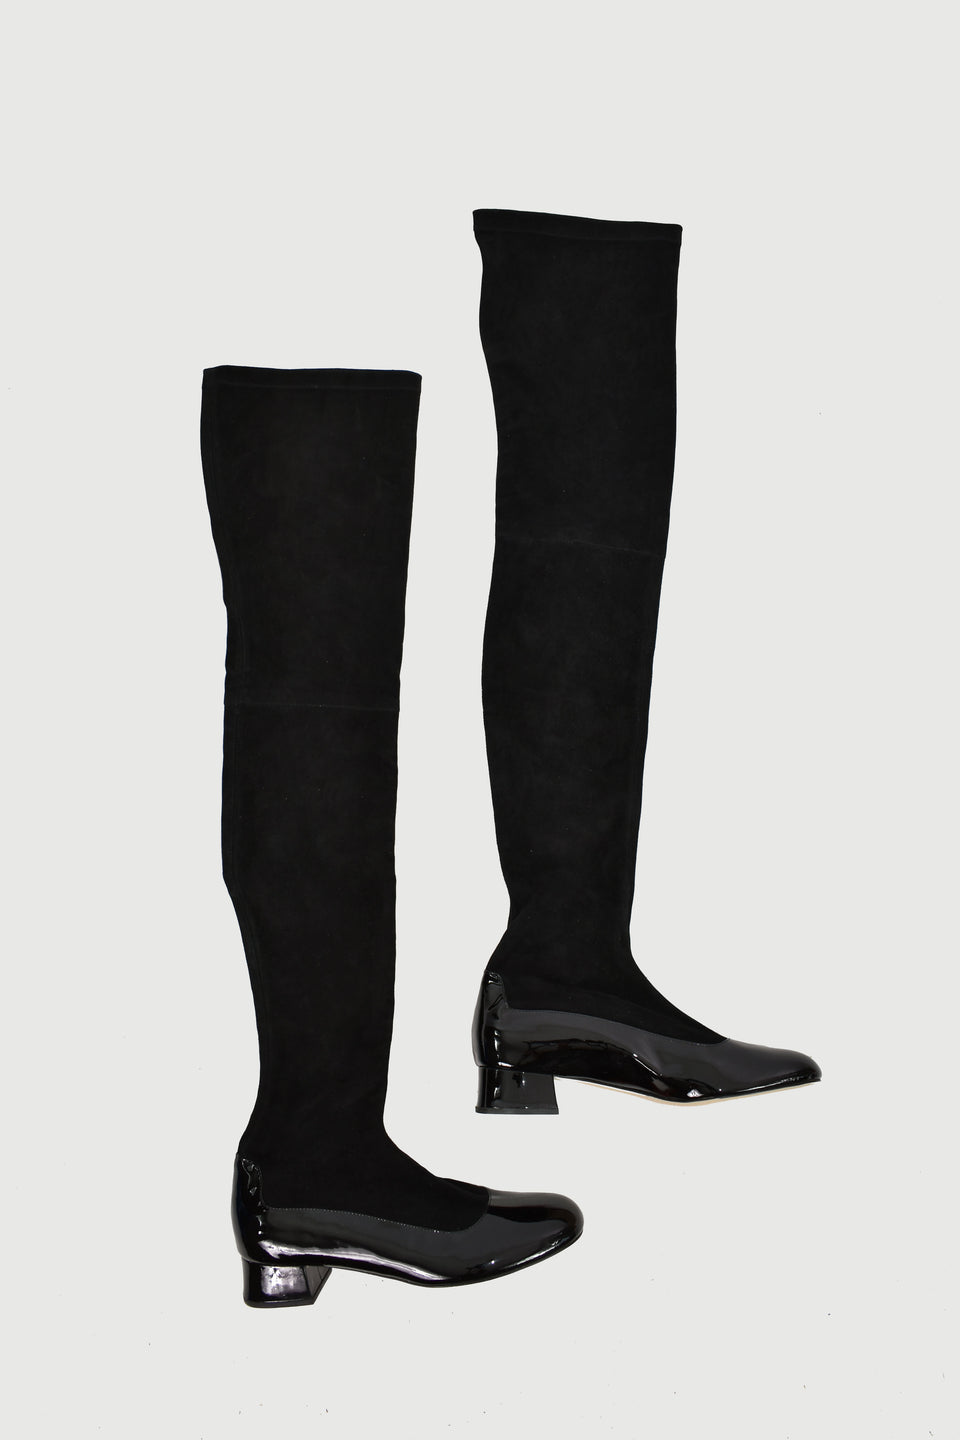 Camilla Elphick Thigh High Boots